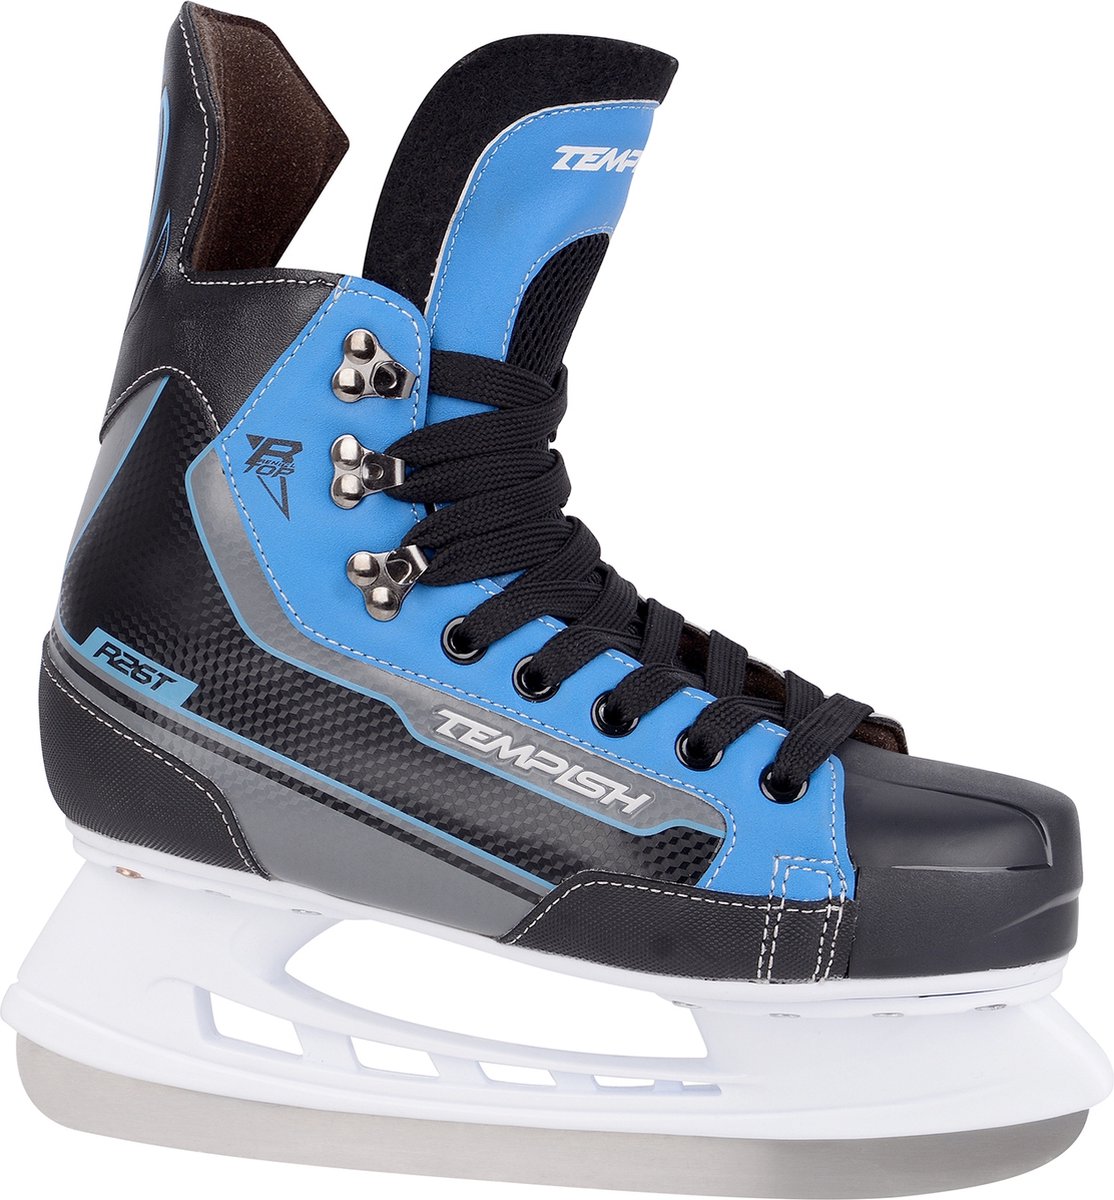 IJshockeyschaatsen R26T maat 44 Tempish Blauw